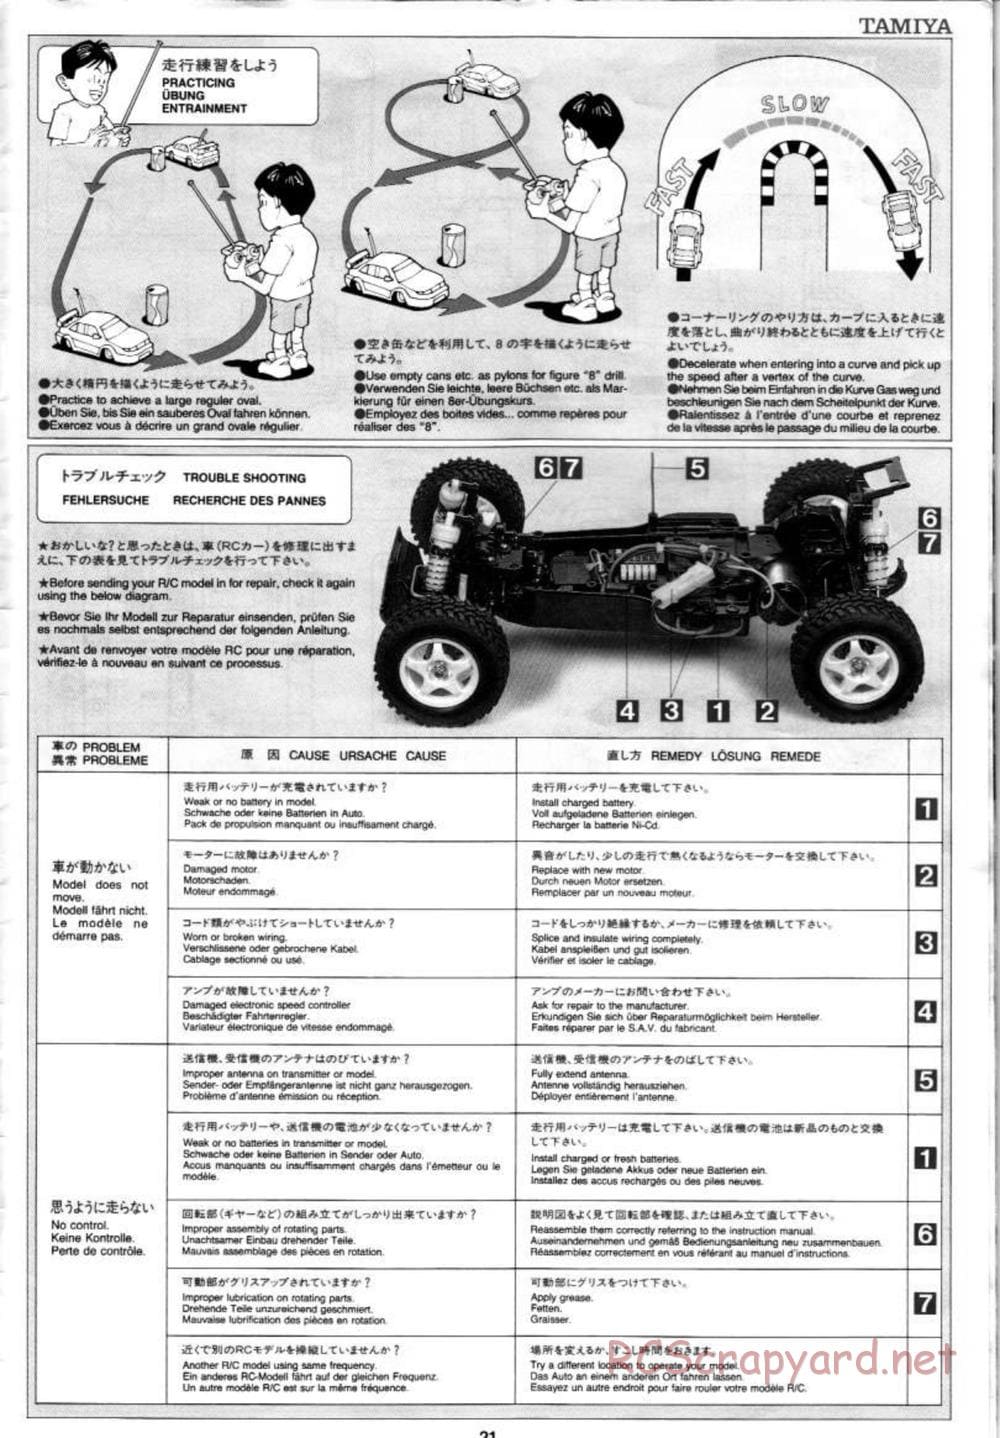 Tamiya - Blazing Star Chassis - Manual - Page 21